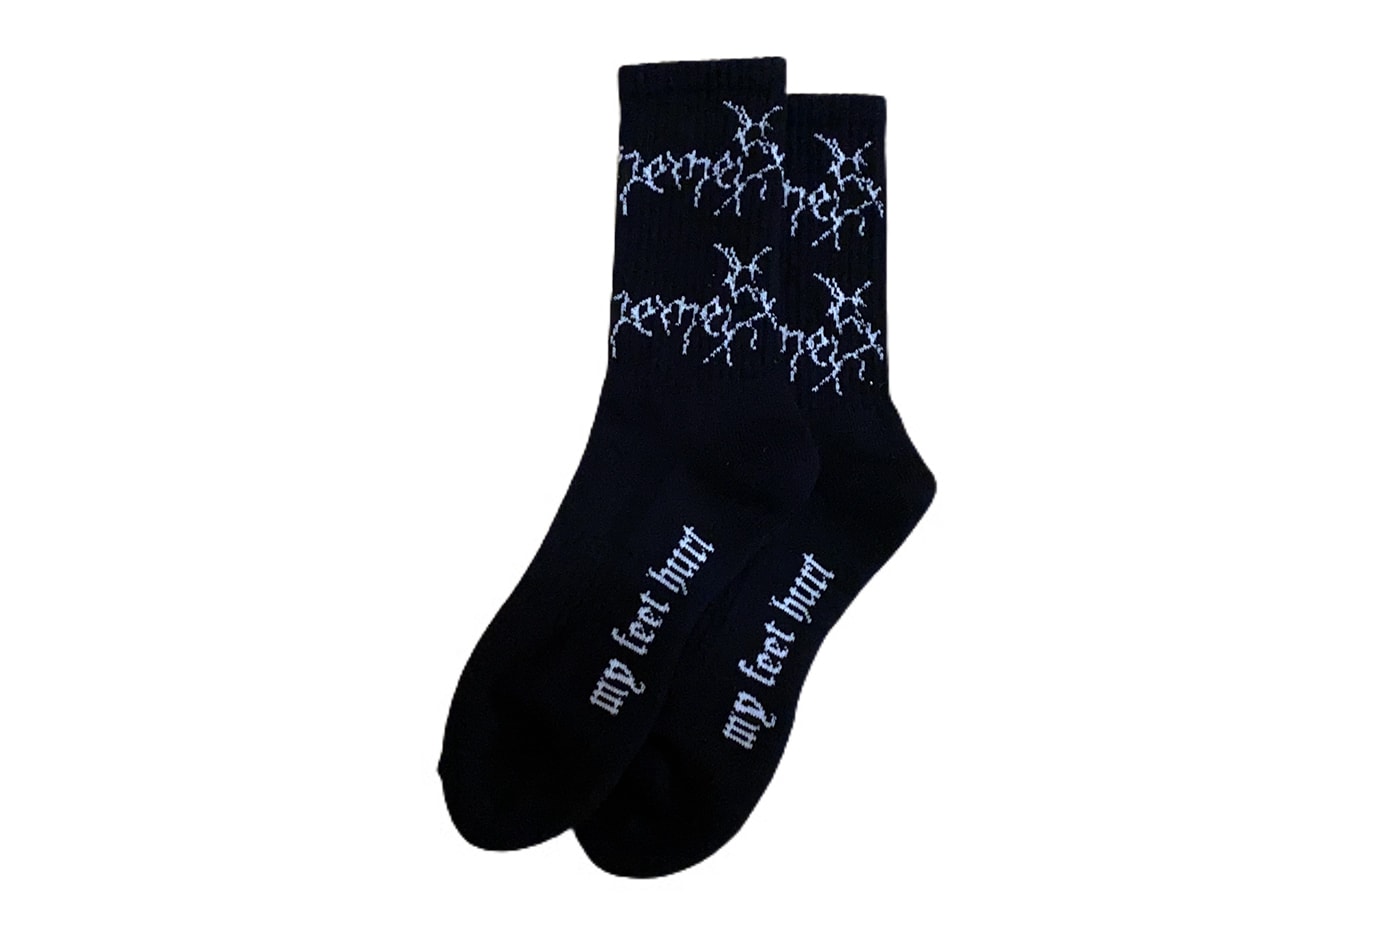 VETEMEMES Fall Winter 2020 Release Info Buy Price Hoodie T shirt Longsleeve Mesh Socks Bandana Hat Davil Tran